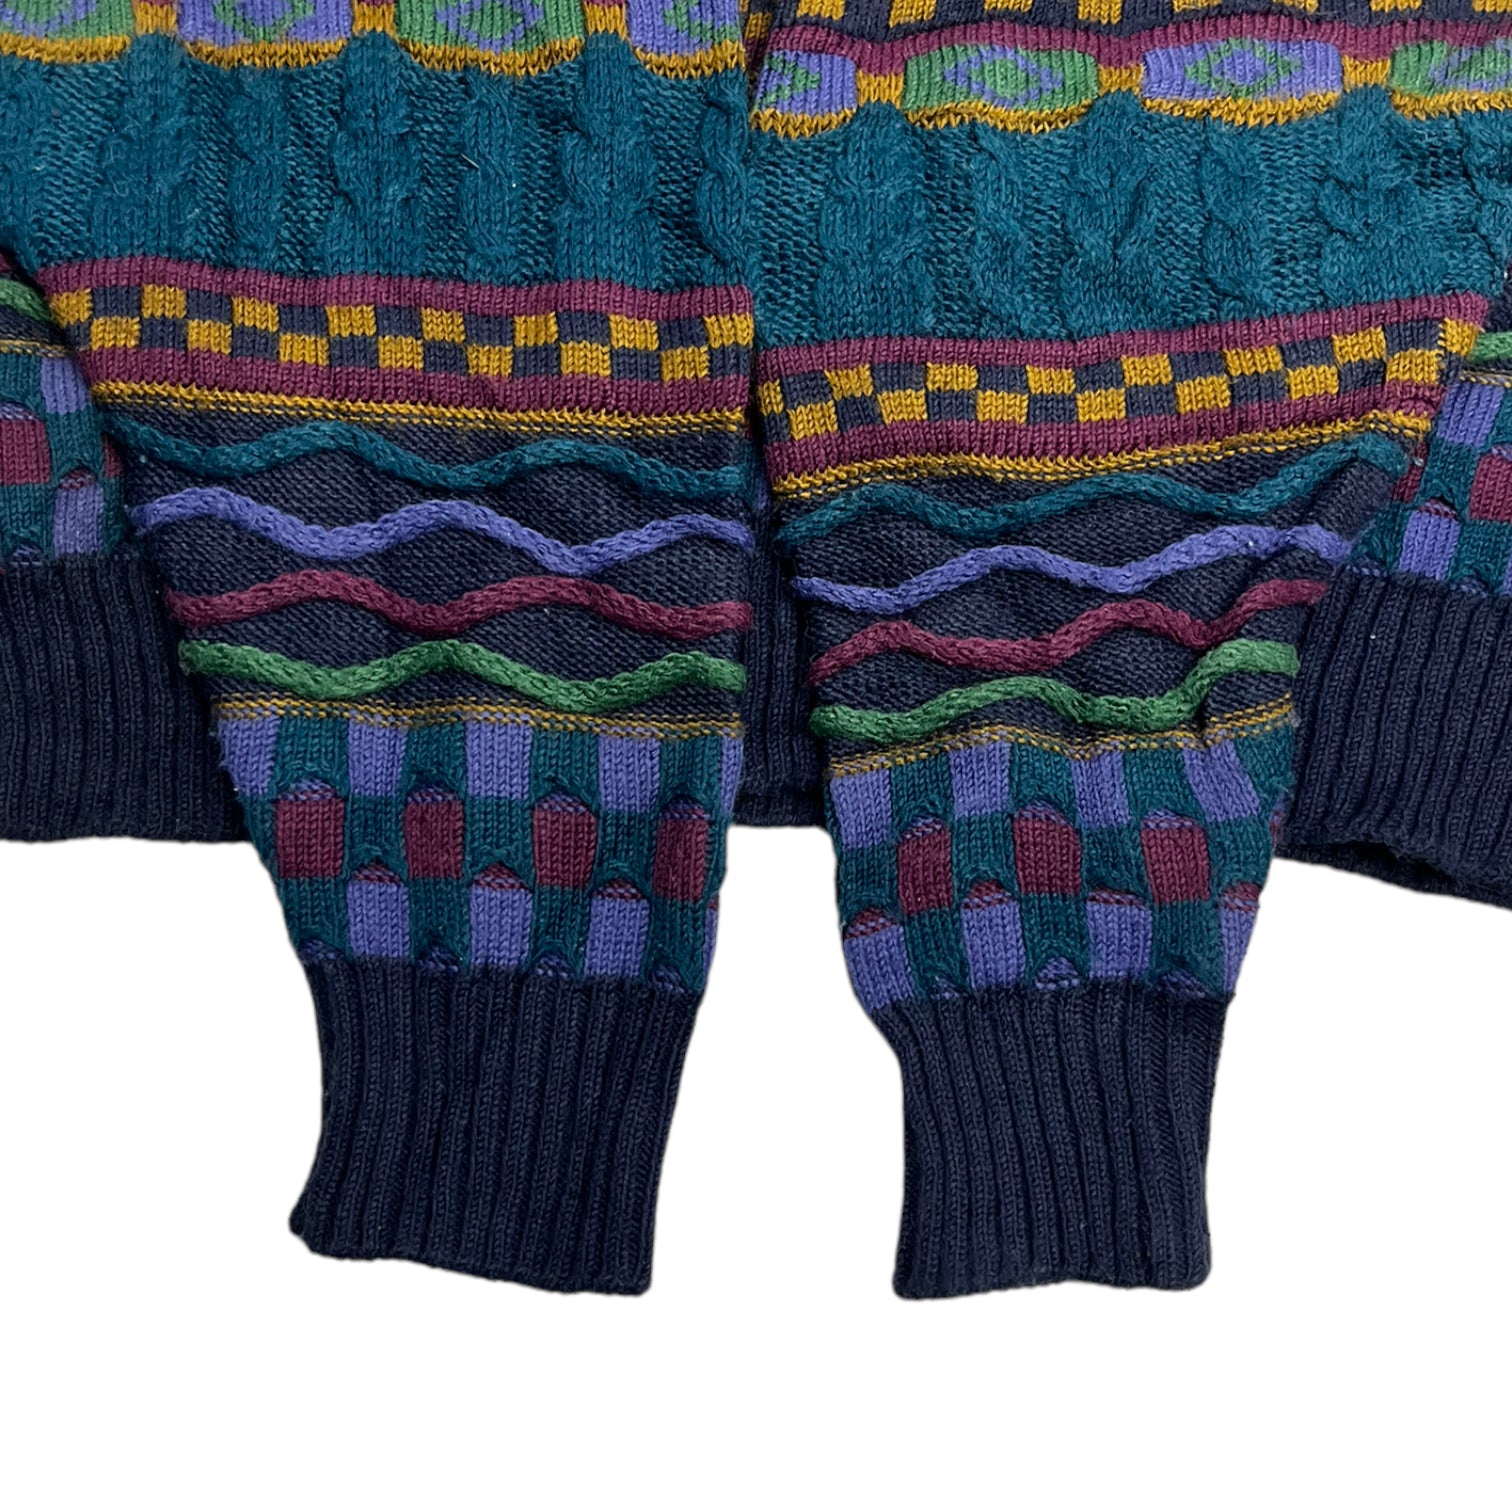 Vintage The Sweater Shop Multi Patterned Knit